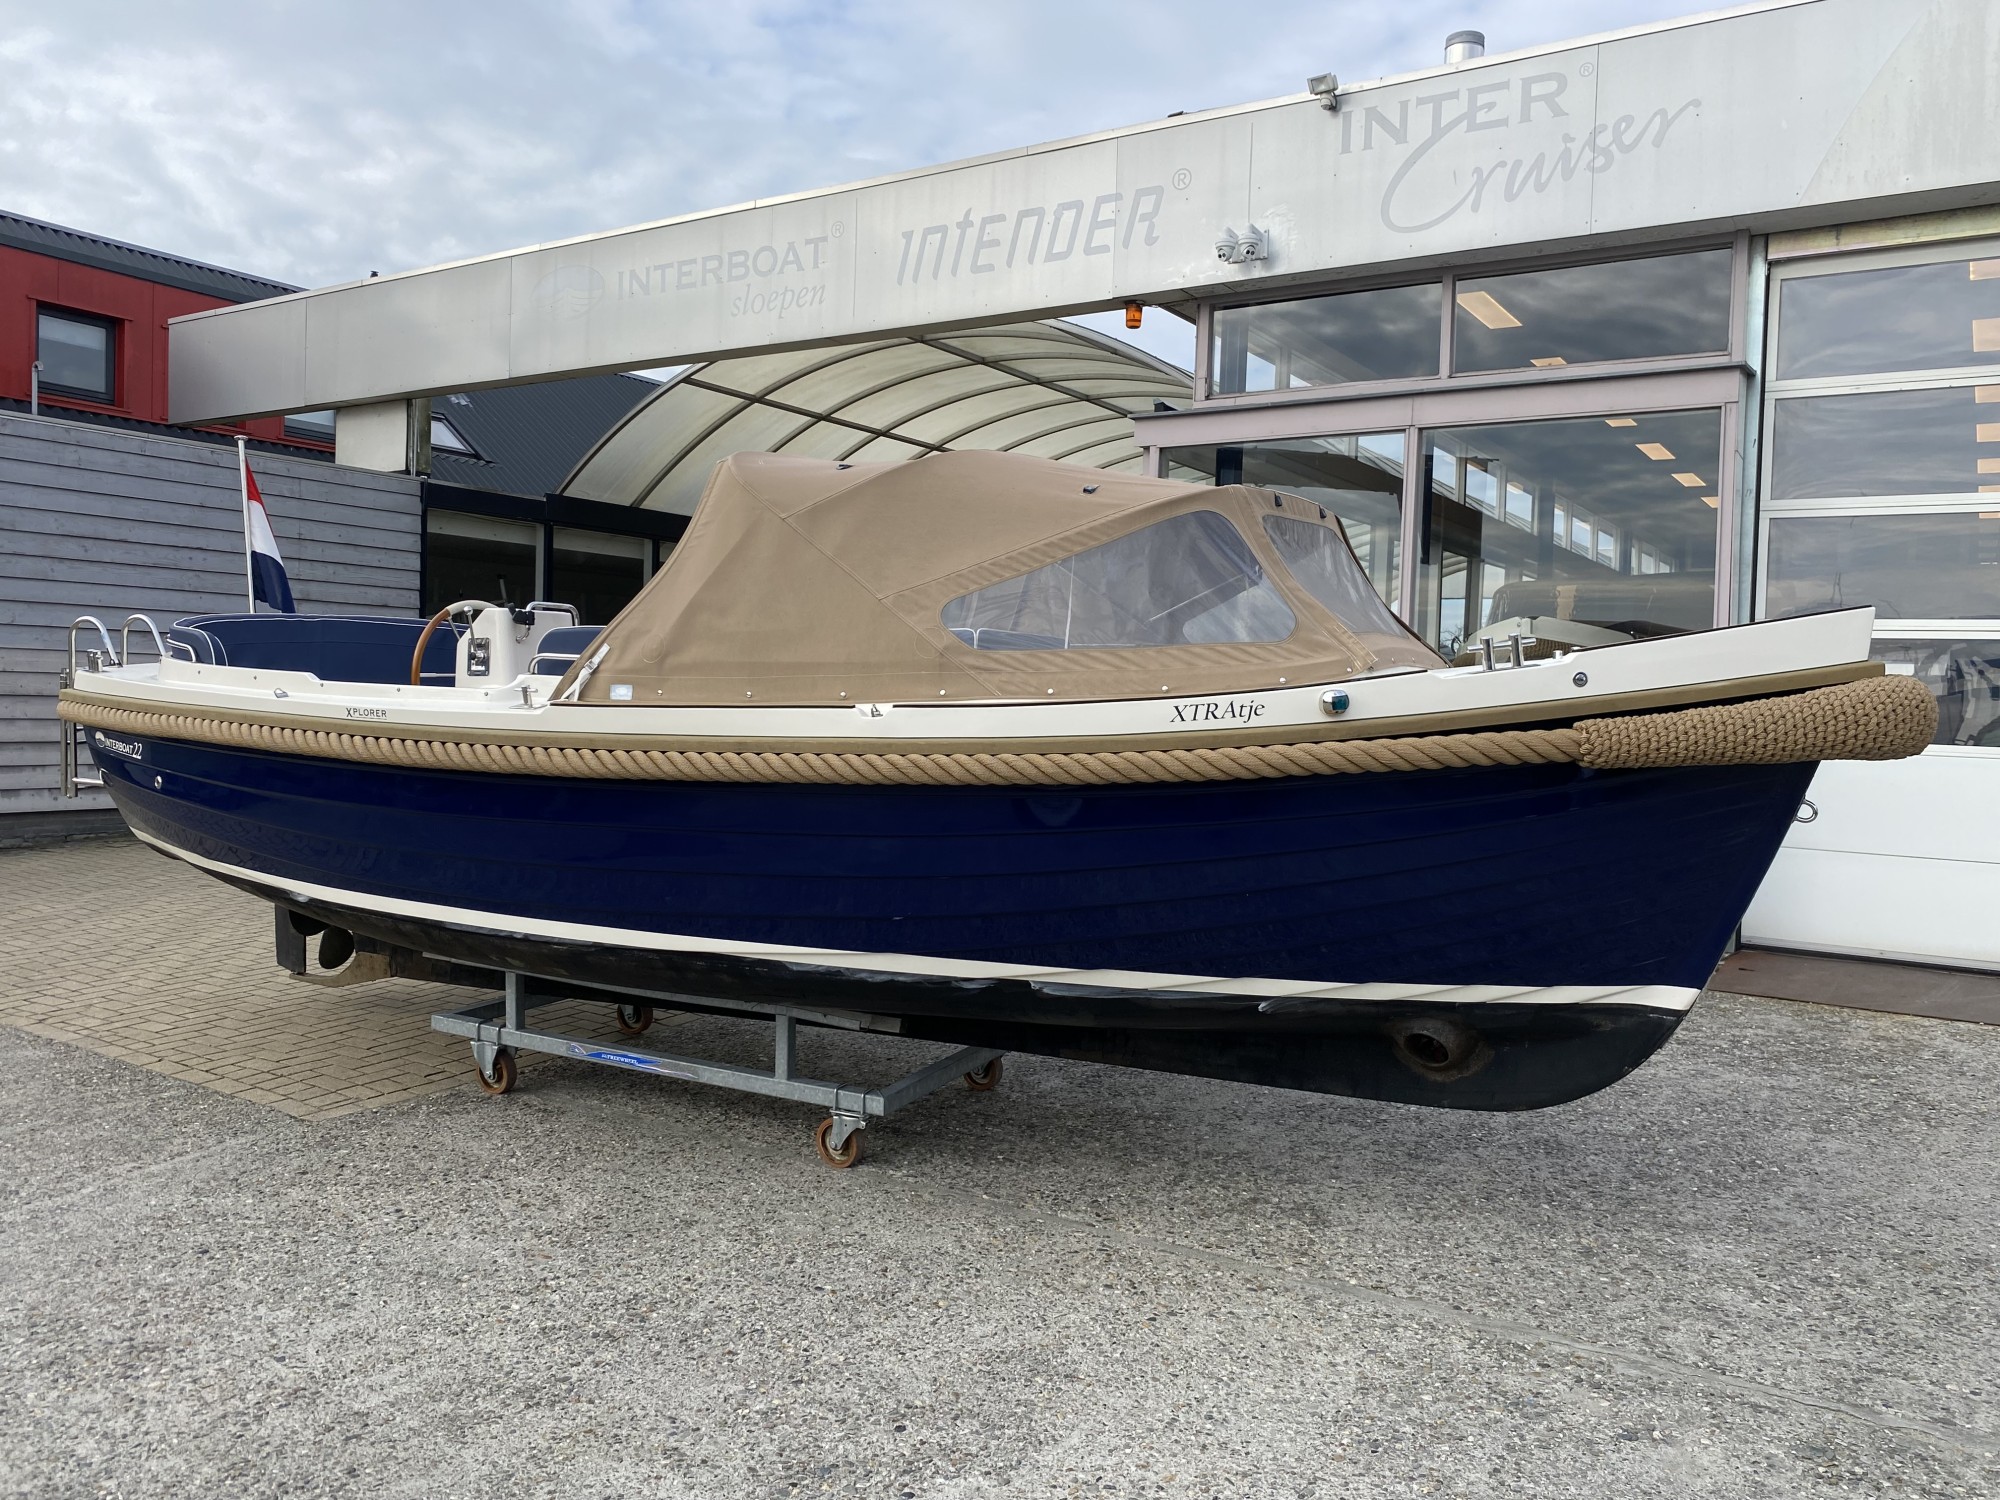 Interboat 22 Xplorer 2018